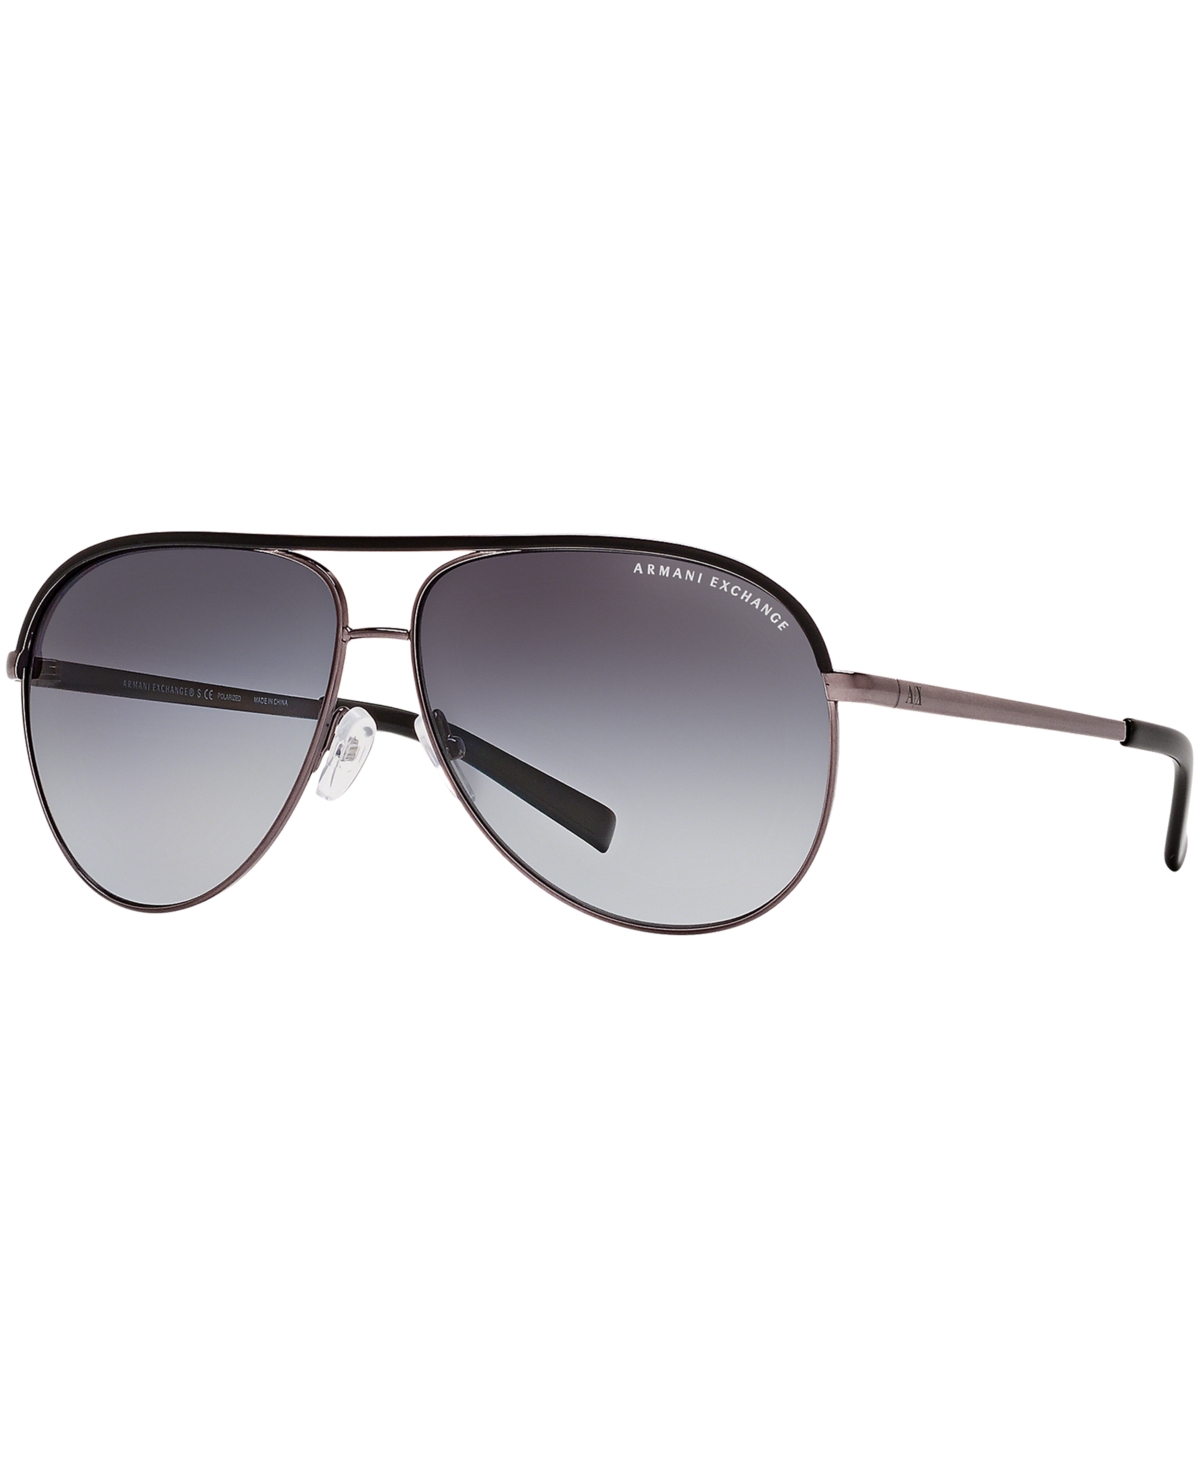 Ax Armani Exchange Polarized Sunglasses , Ax Ax2002p In Gunmetal Black,grey Gradient Polar